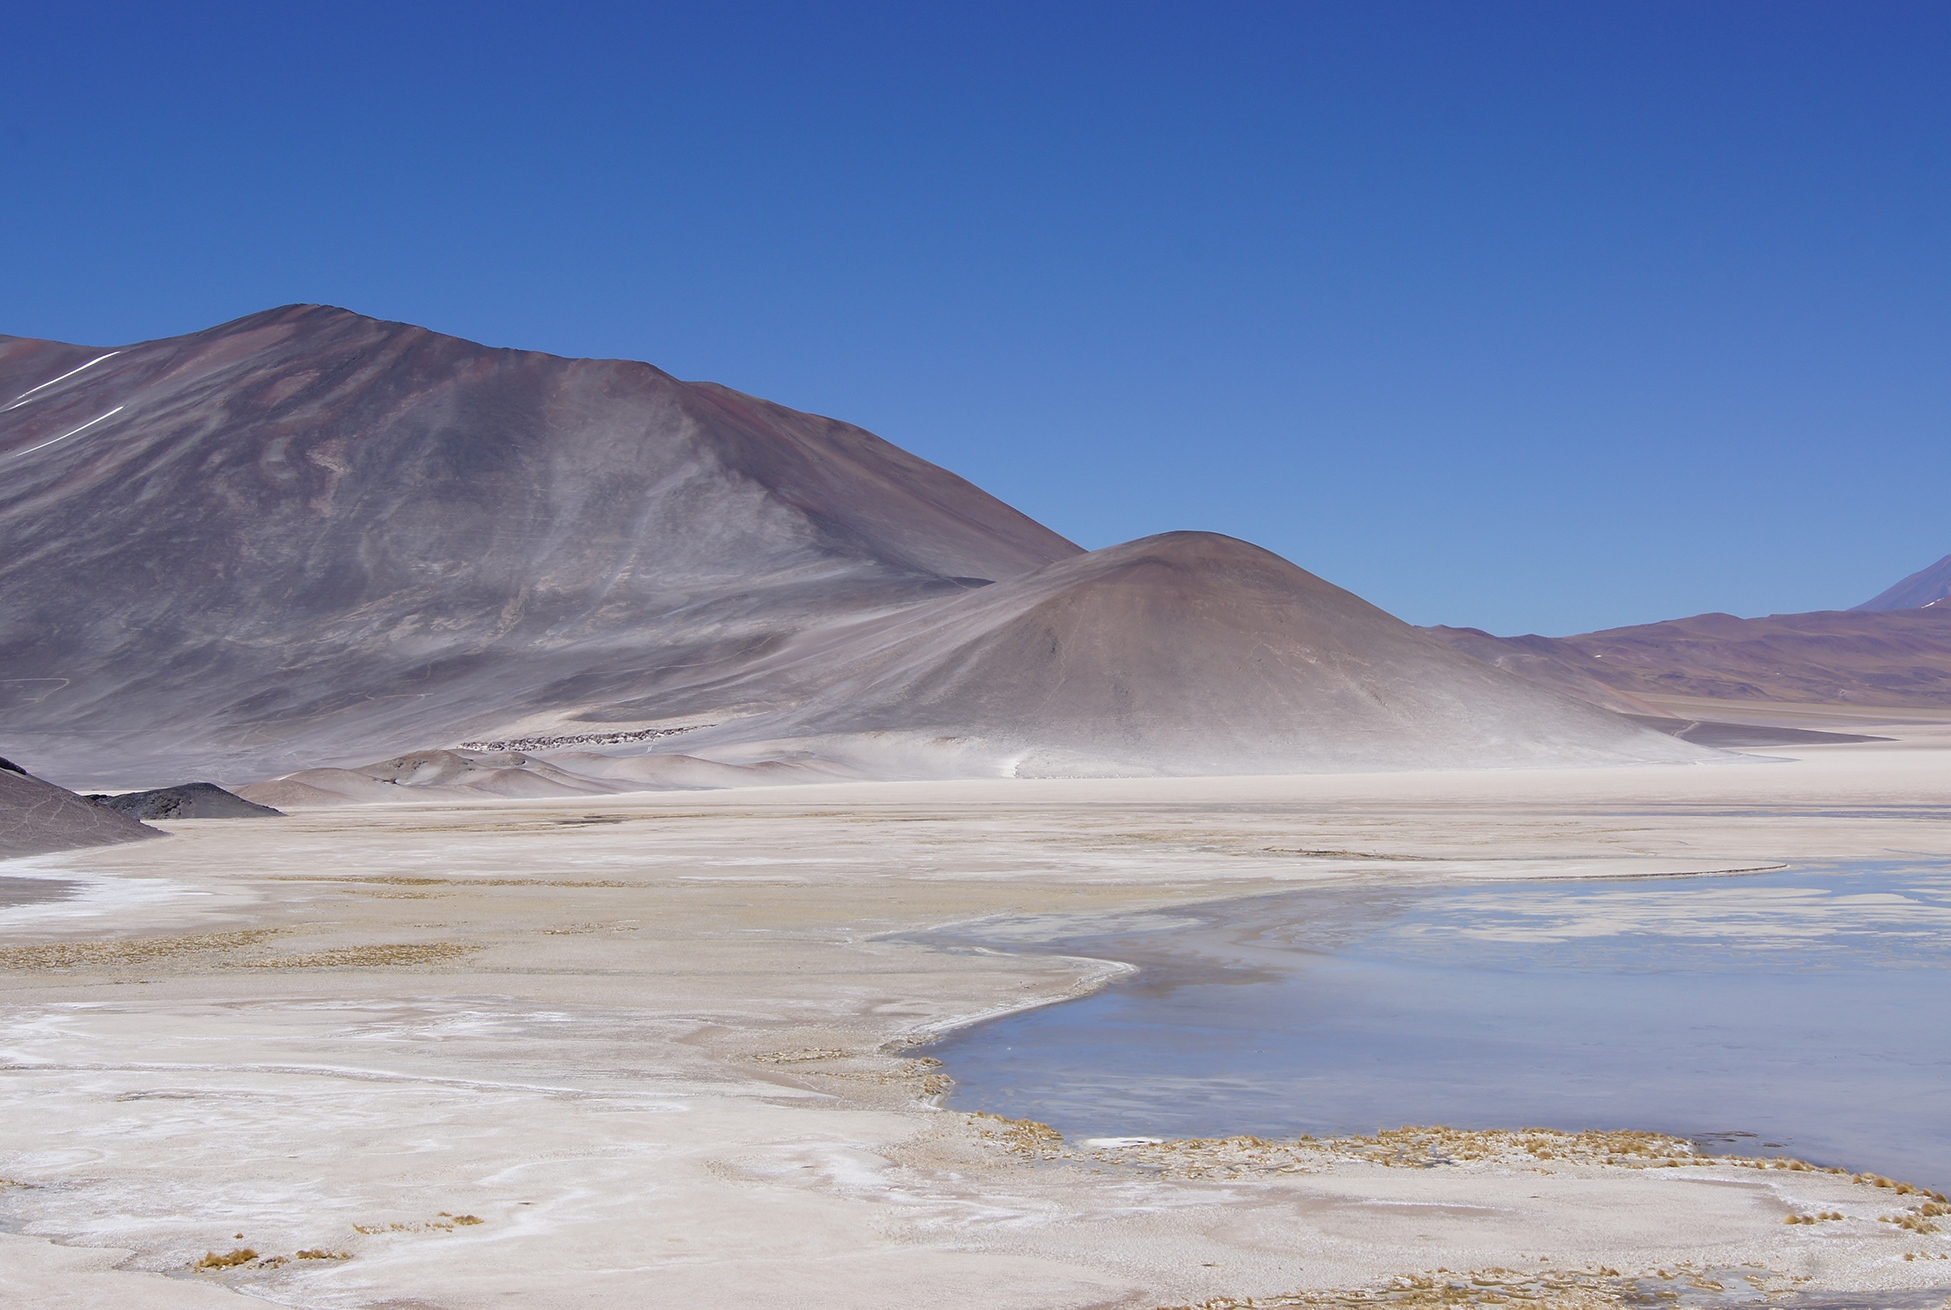 Atacama Desert in Chile: Atacama Salt Flats (Salar de Atacama) and Sand-swept Mountainous Terrain